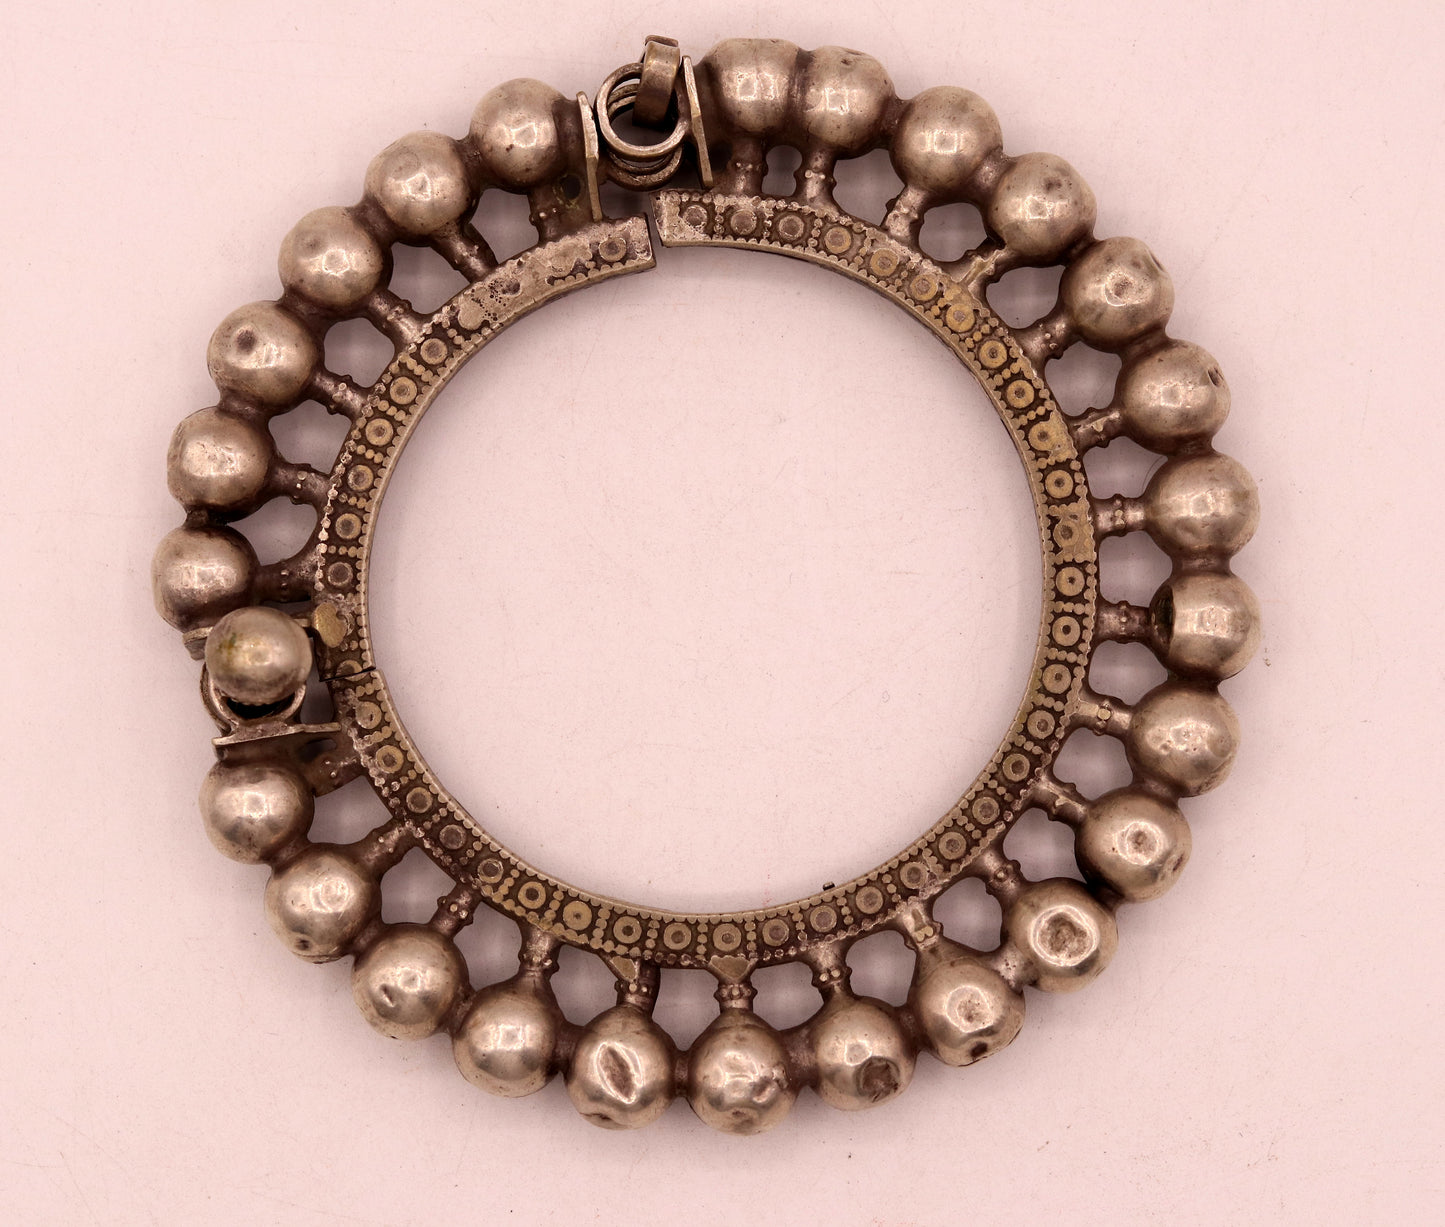 Vintage antique silver old bangle kakan kangan chudi tribal antique jewelry cuff bracelet gorgeous handmade ethnic Banjara jewelry sba11 - TRIBAL ORNAMENTS